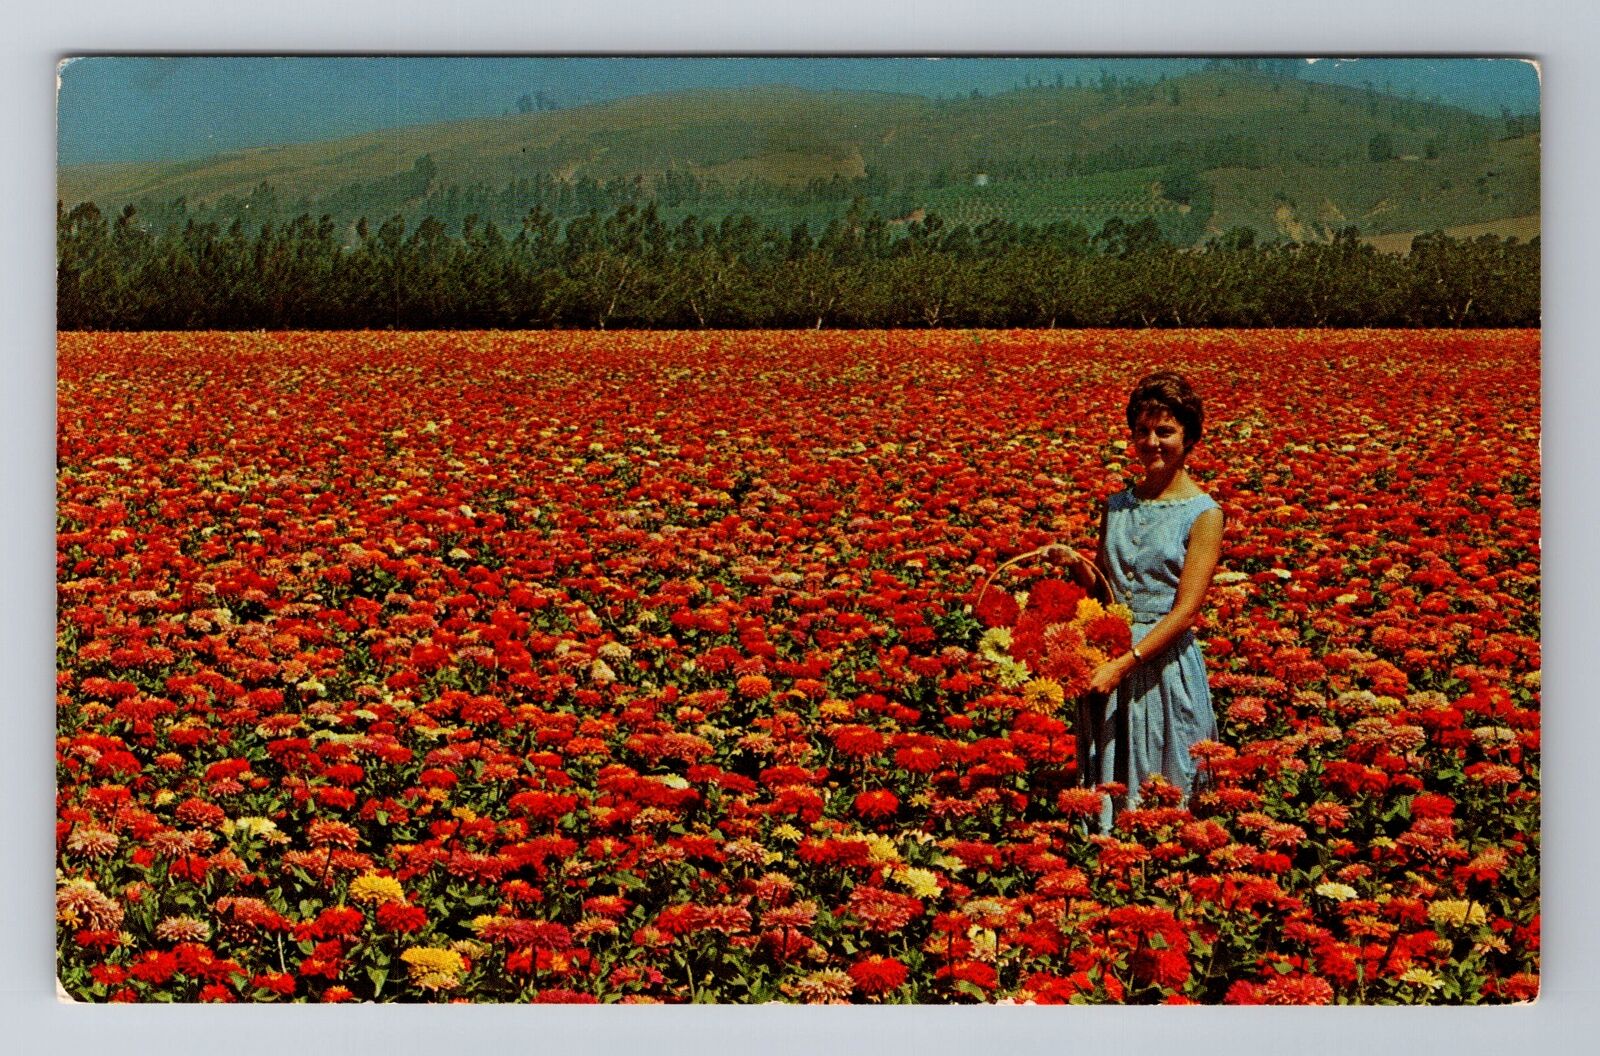 Lompoc CA-California, Burpeeana Giant Zinnias Growing Seeds, Vintage Postcard